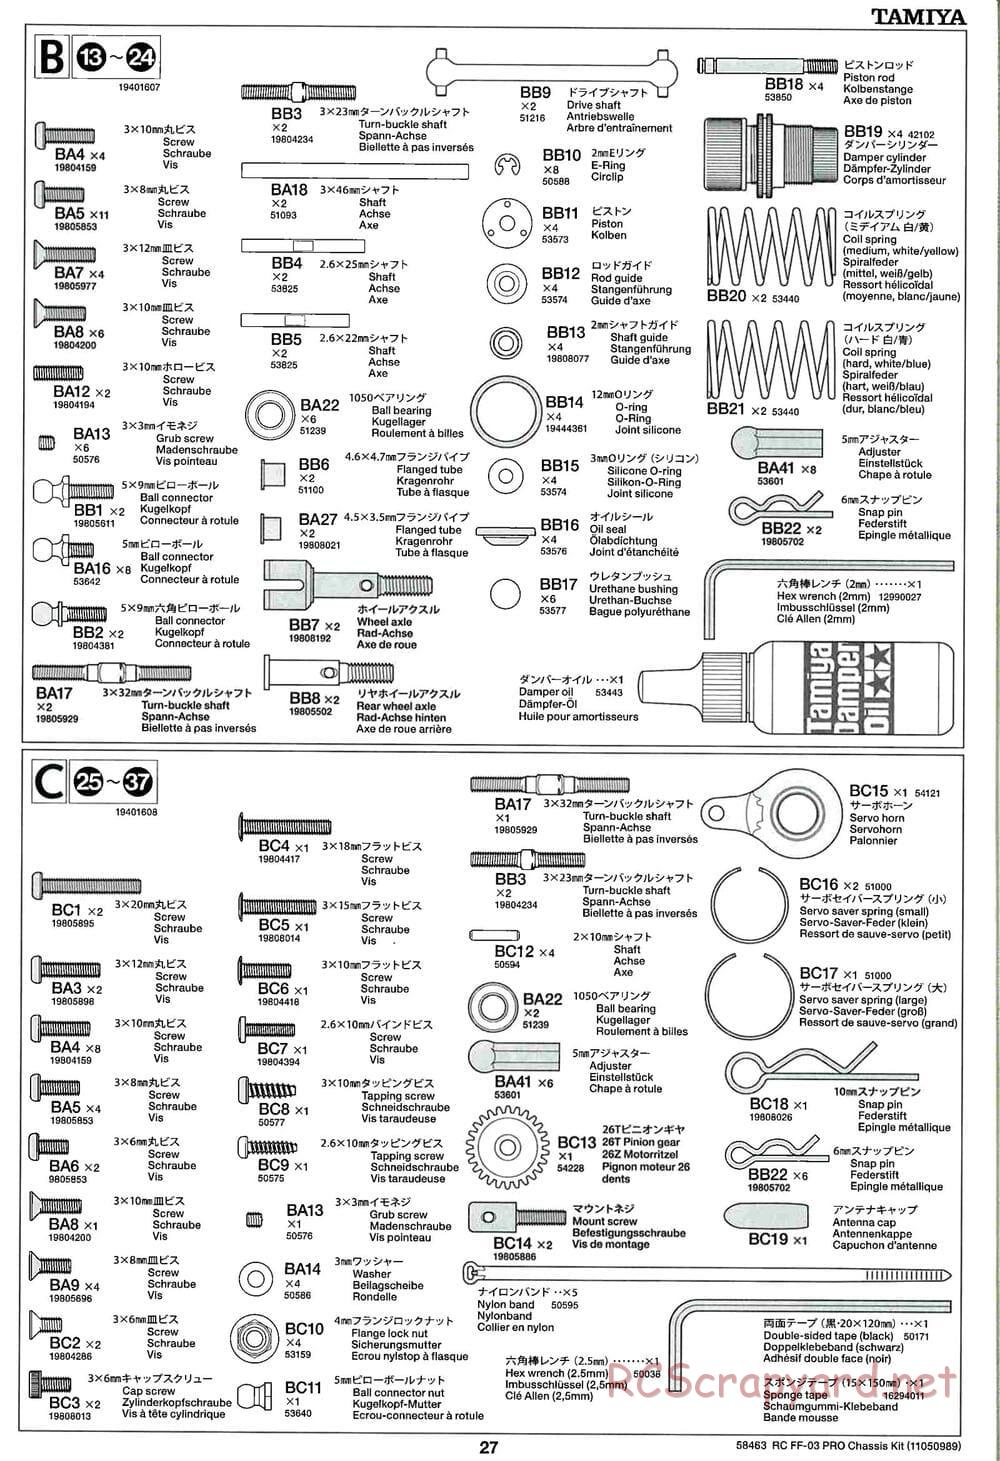 Tamiya - FF-03 Pro Chassis - Manual - Page 27